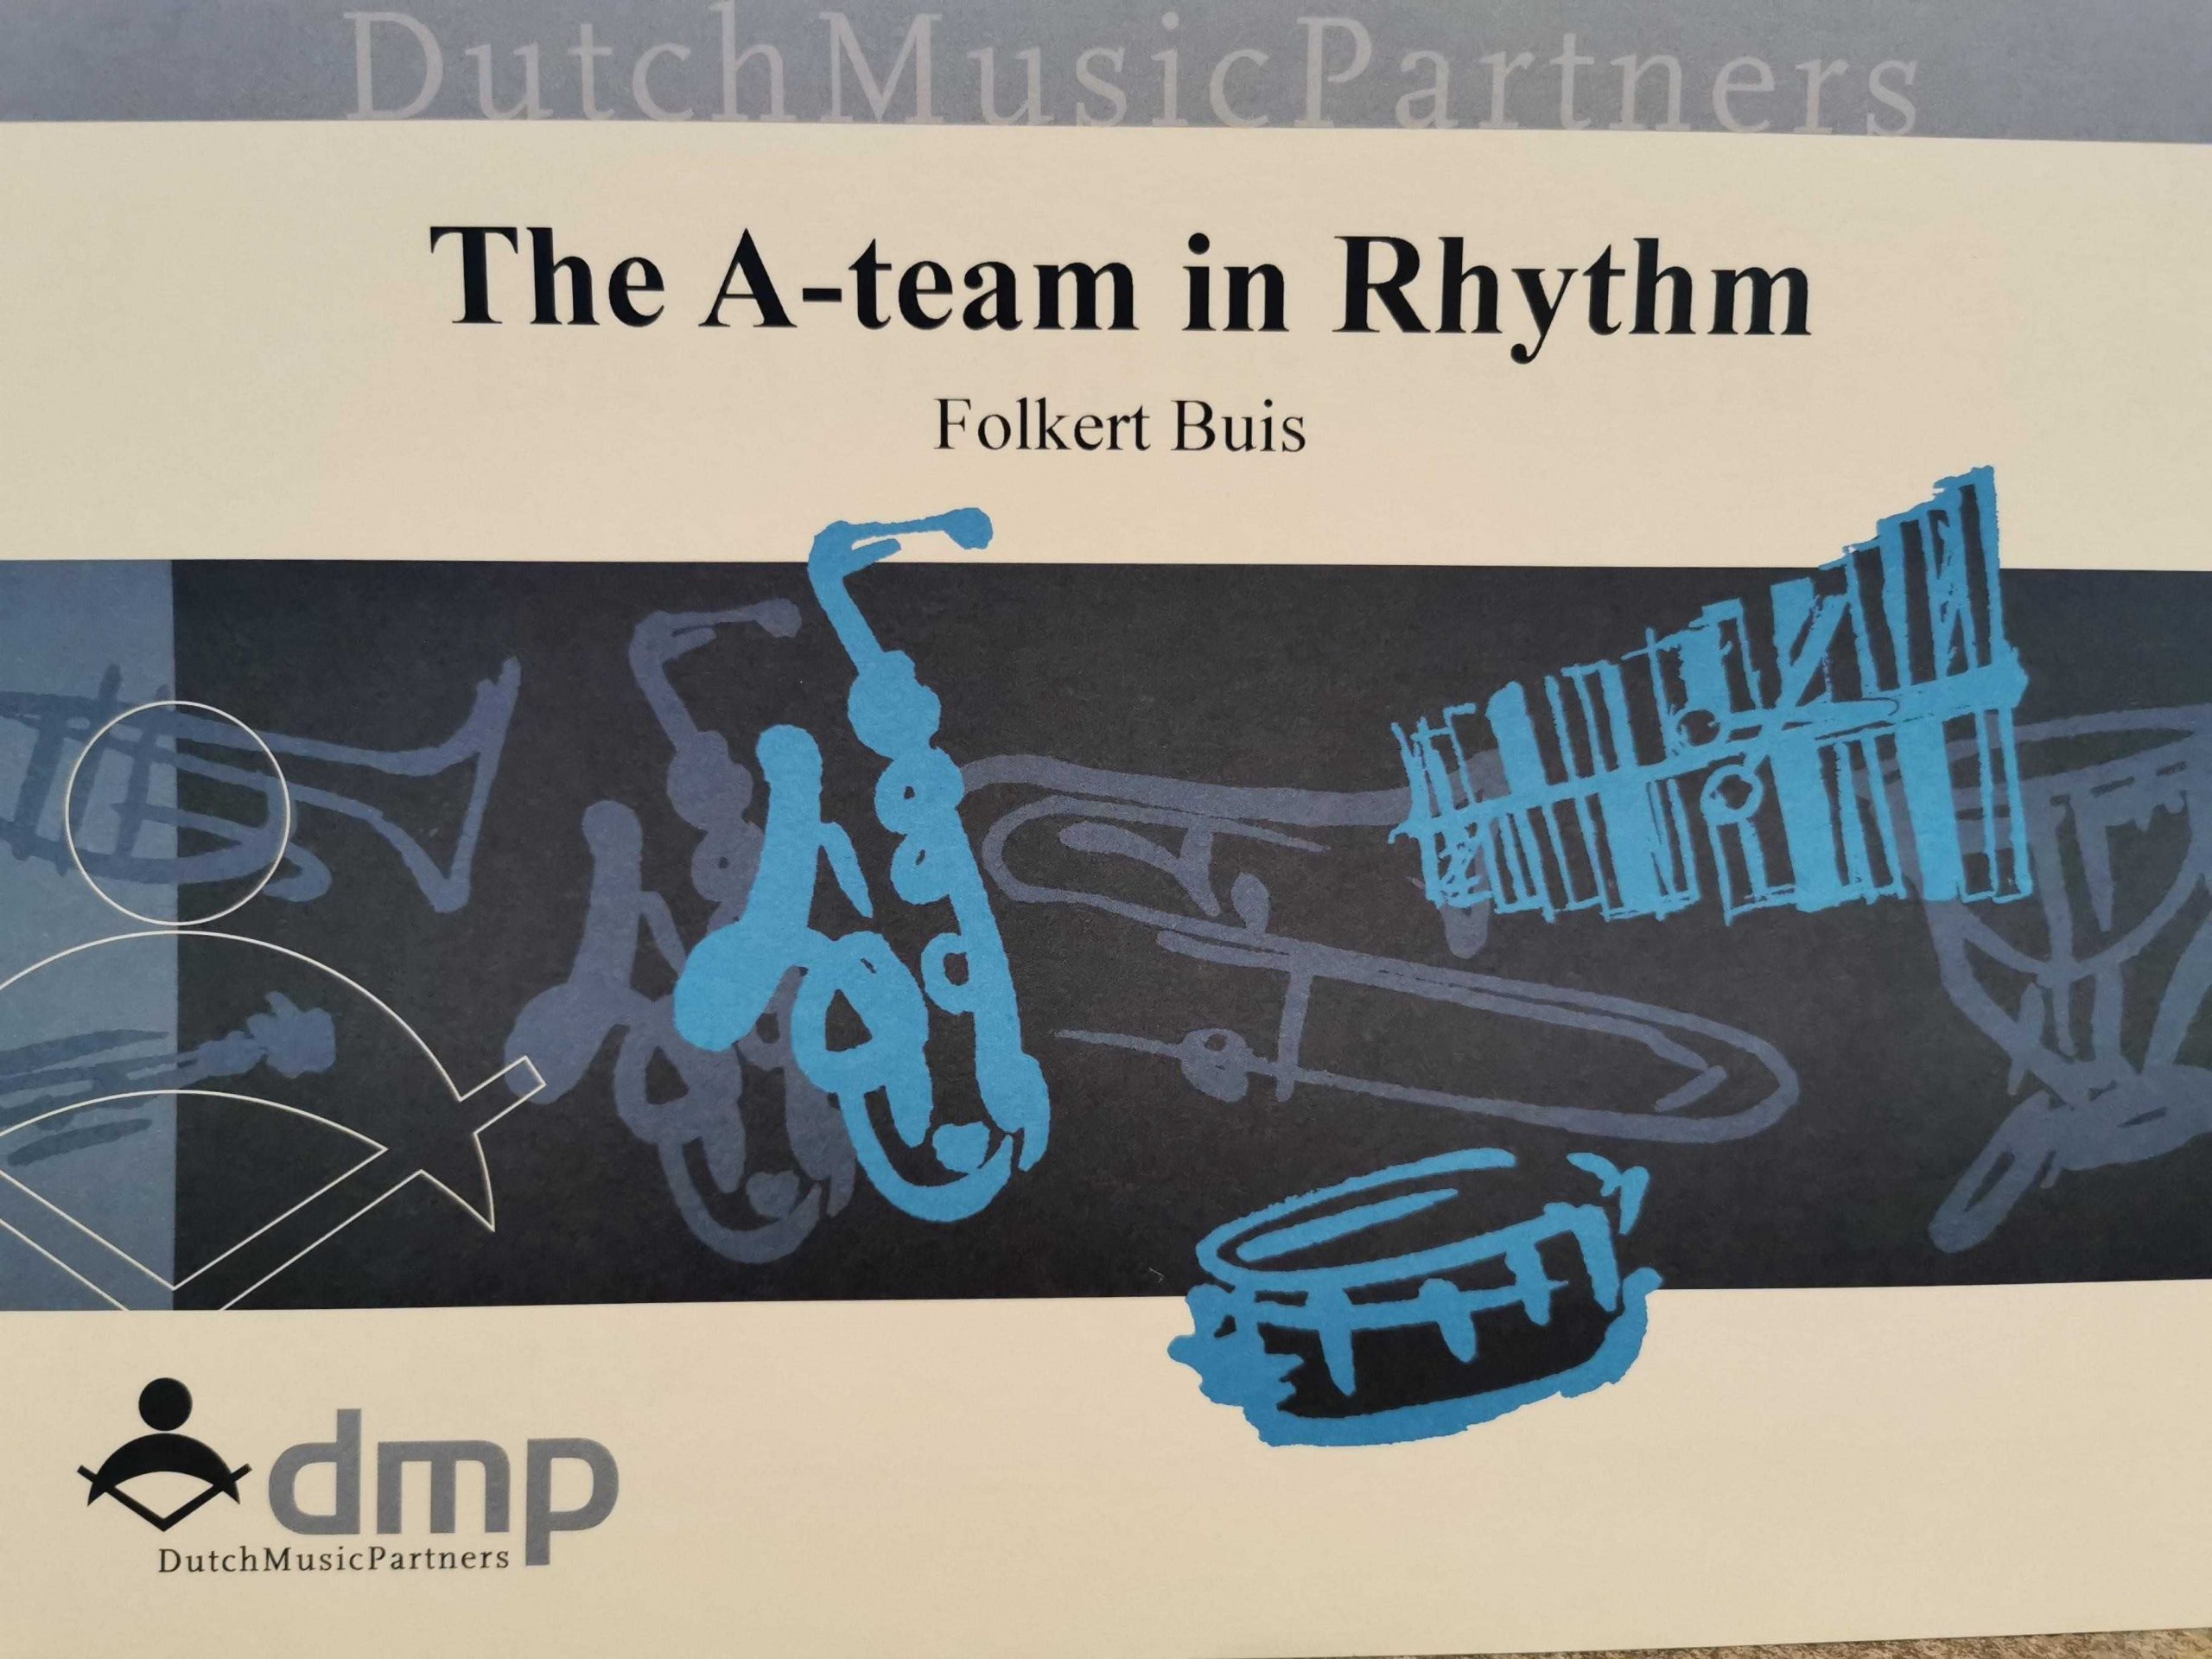 The A-team in Rhythm by Folkert Buis